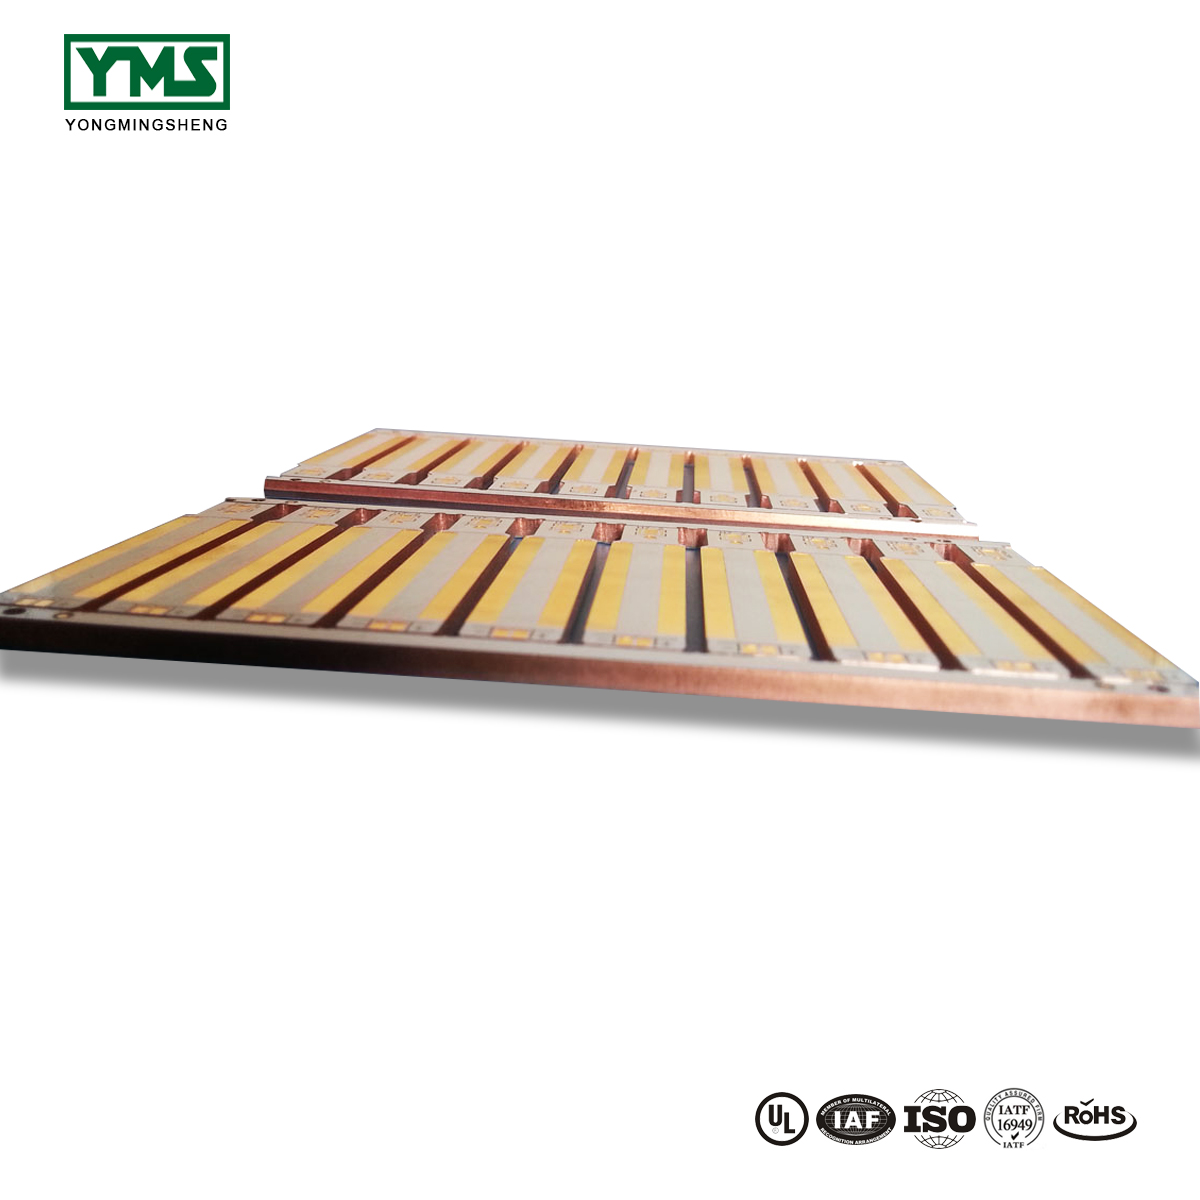 PriceList for Ceramic Pcb - Copper Base High Power (Metal core) Board | YMS PCB – Yongmingsheng